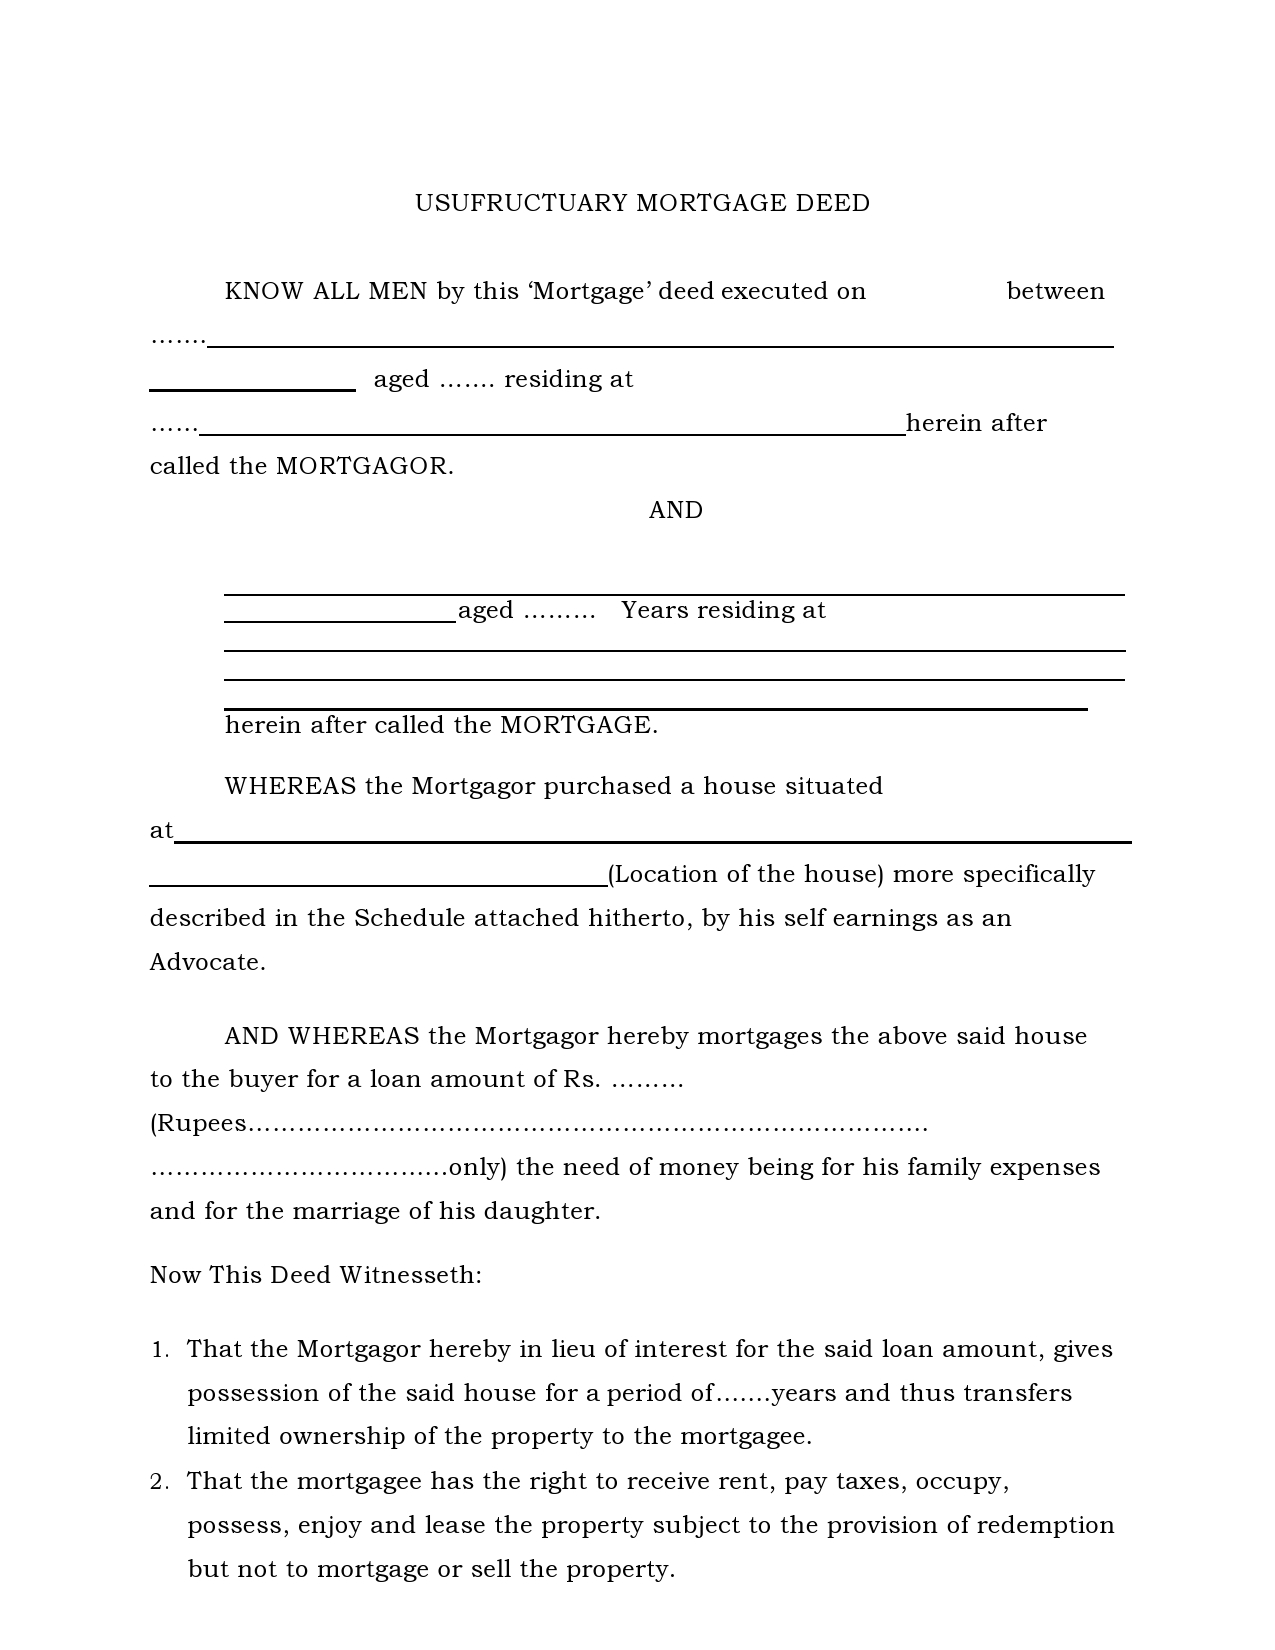 Free mortgage deed 40